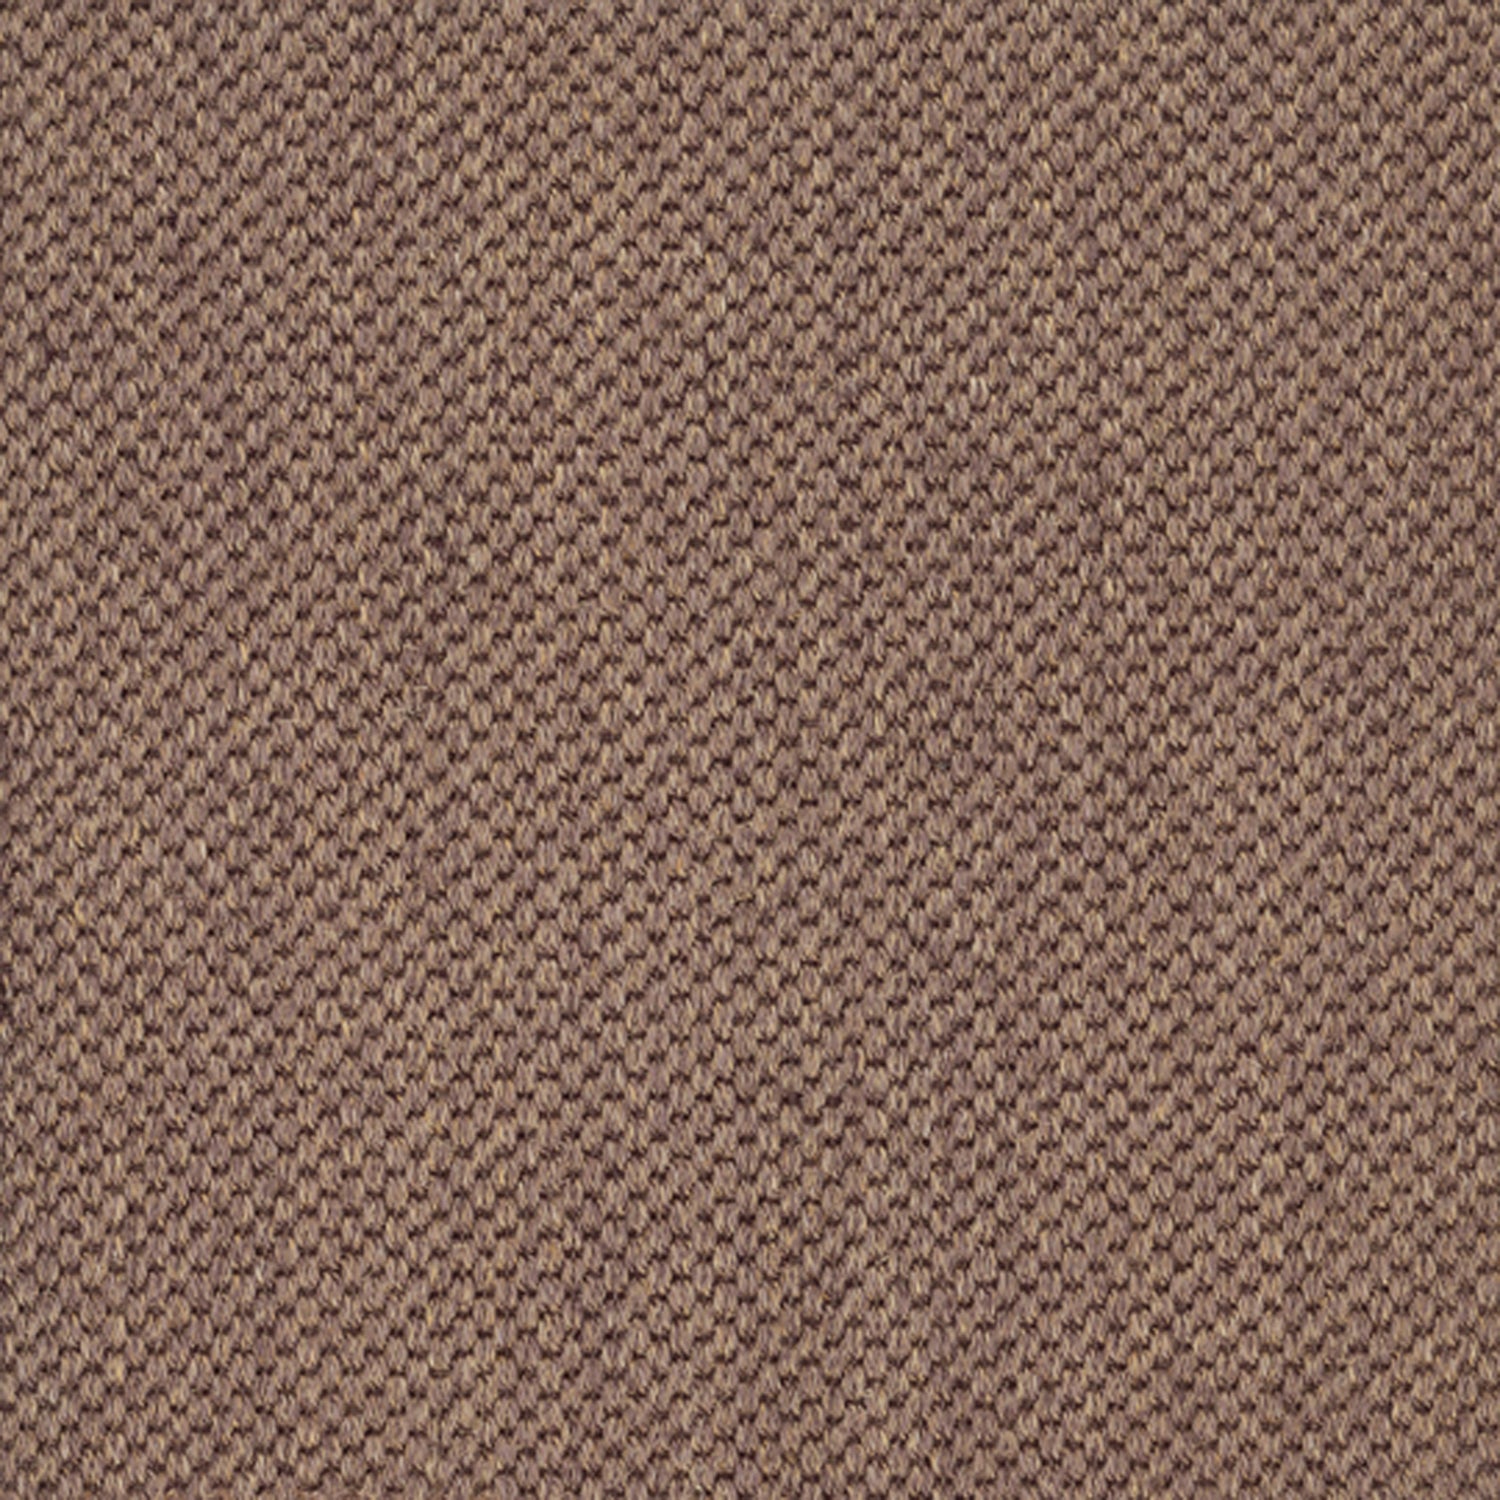 Sisal broadloom carpet swatch in a flat grid weave in "Ashland" brown-gray.